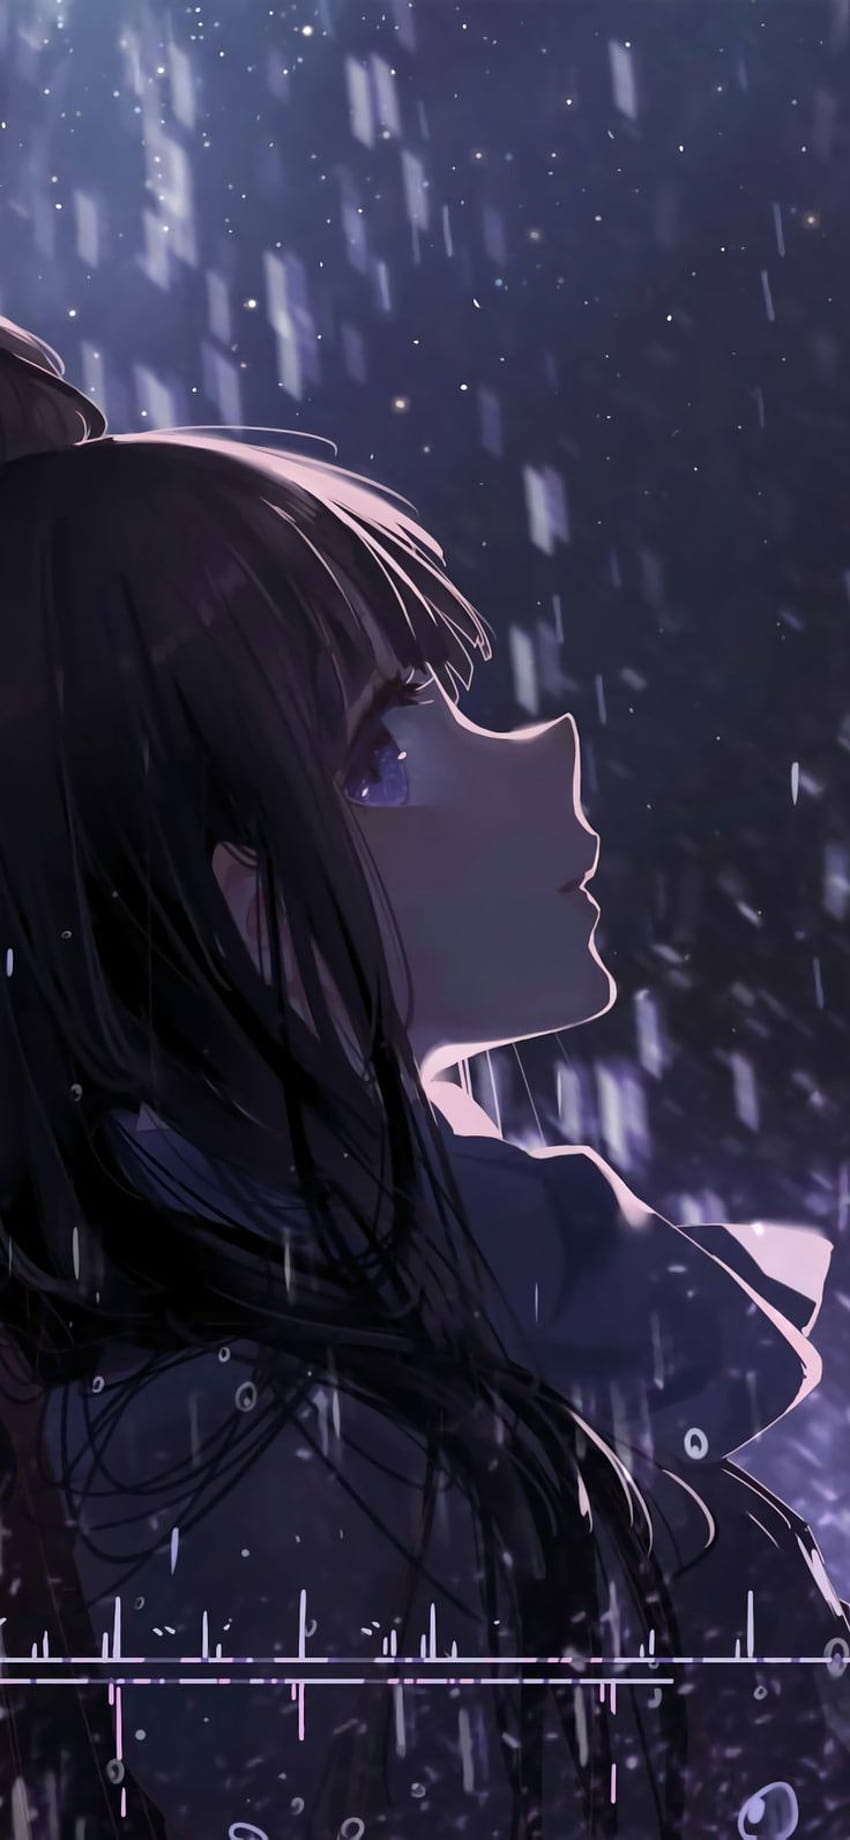 Depressed Anime Girl Crying  Transparent Cartoons  Sad Anime Girl Crying  HD Png Download  Transparent Png Image  PNGitem